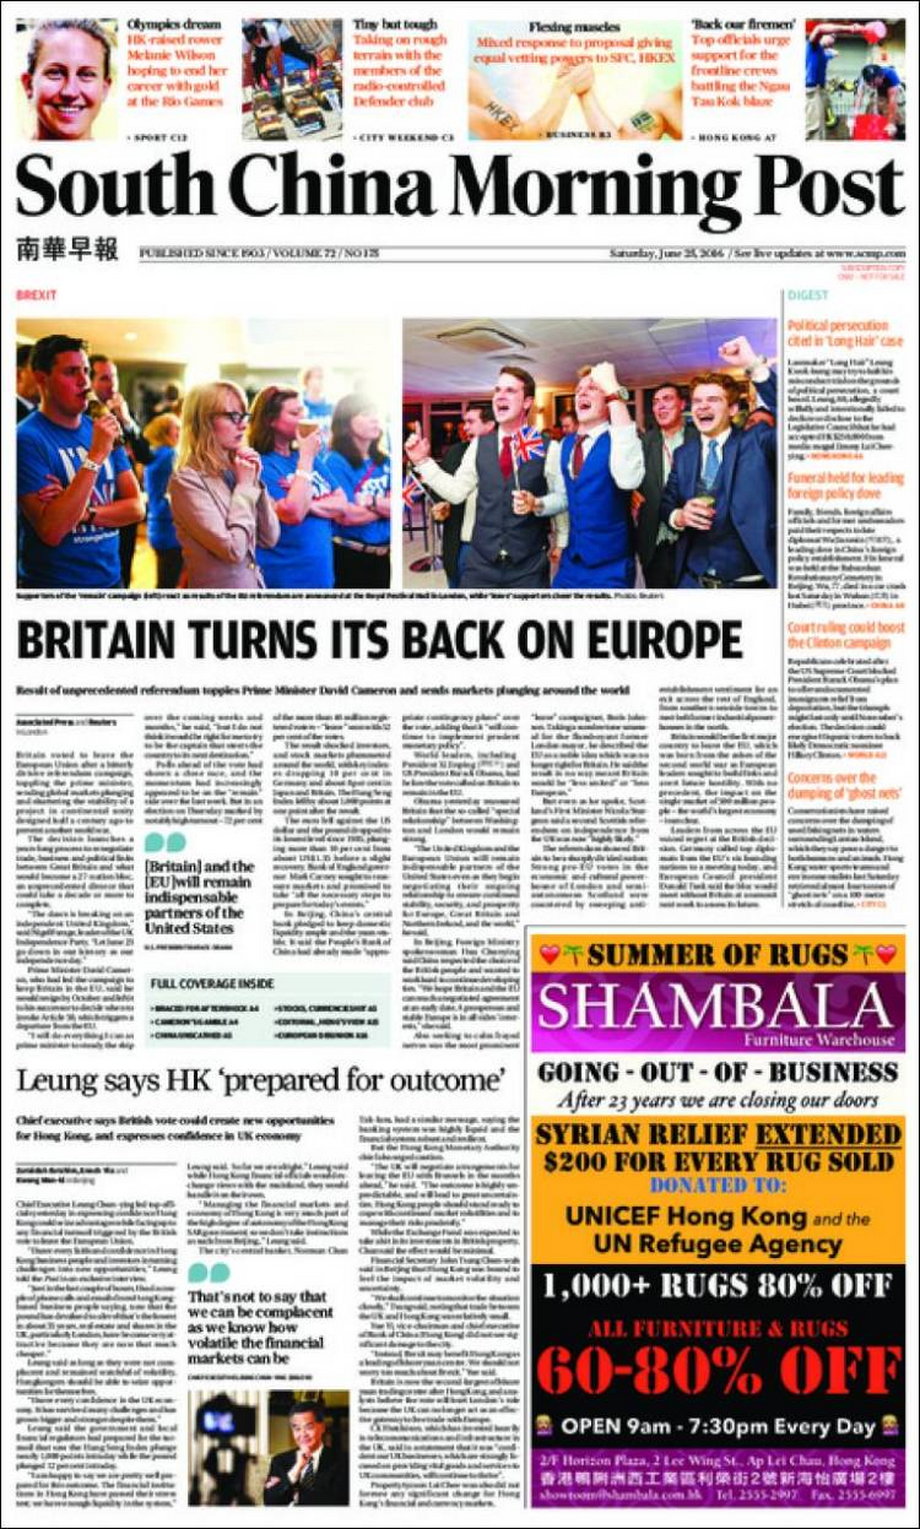 South China Morning Post: "Brytania odwraca się od Europy"